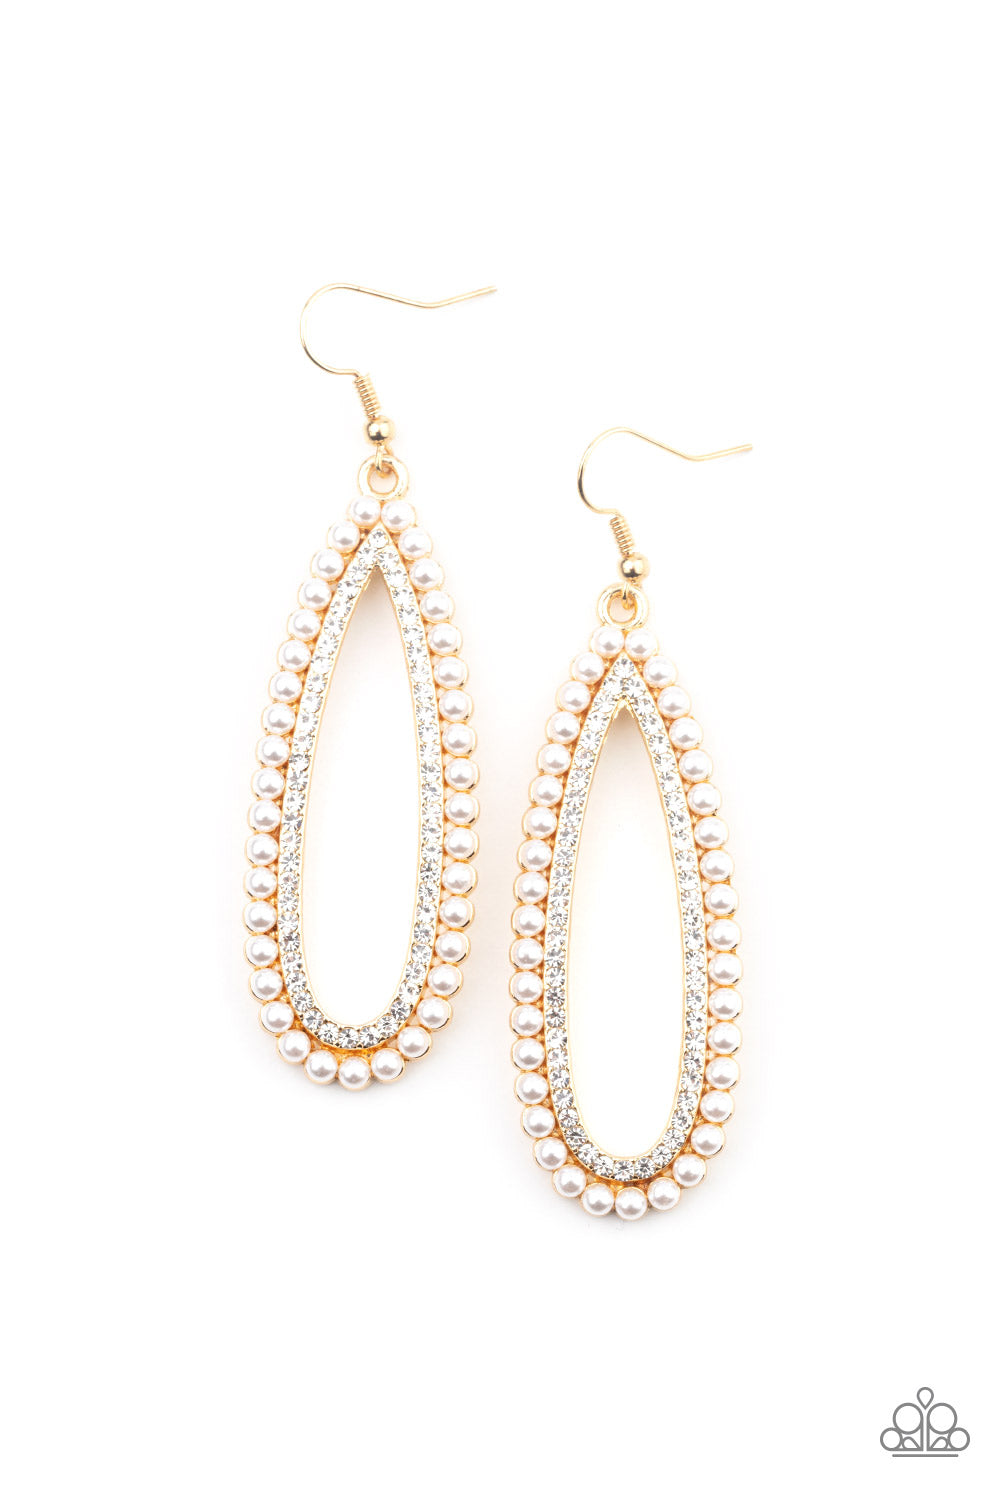 Glamorously Glowing - Gold & White Pearl Earrings - Princess Glam Shop